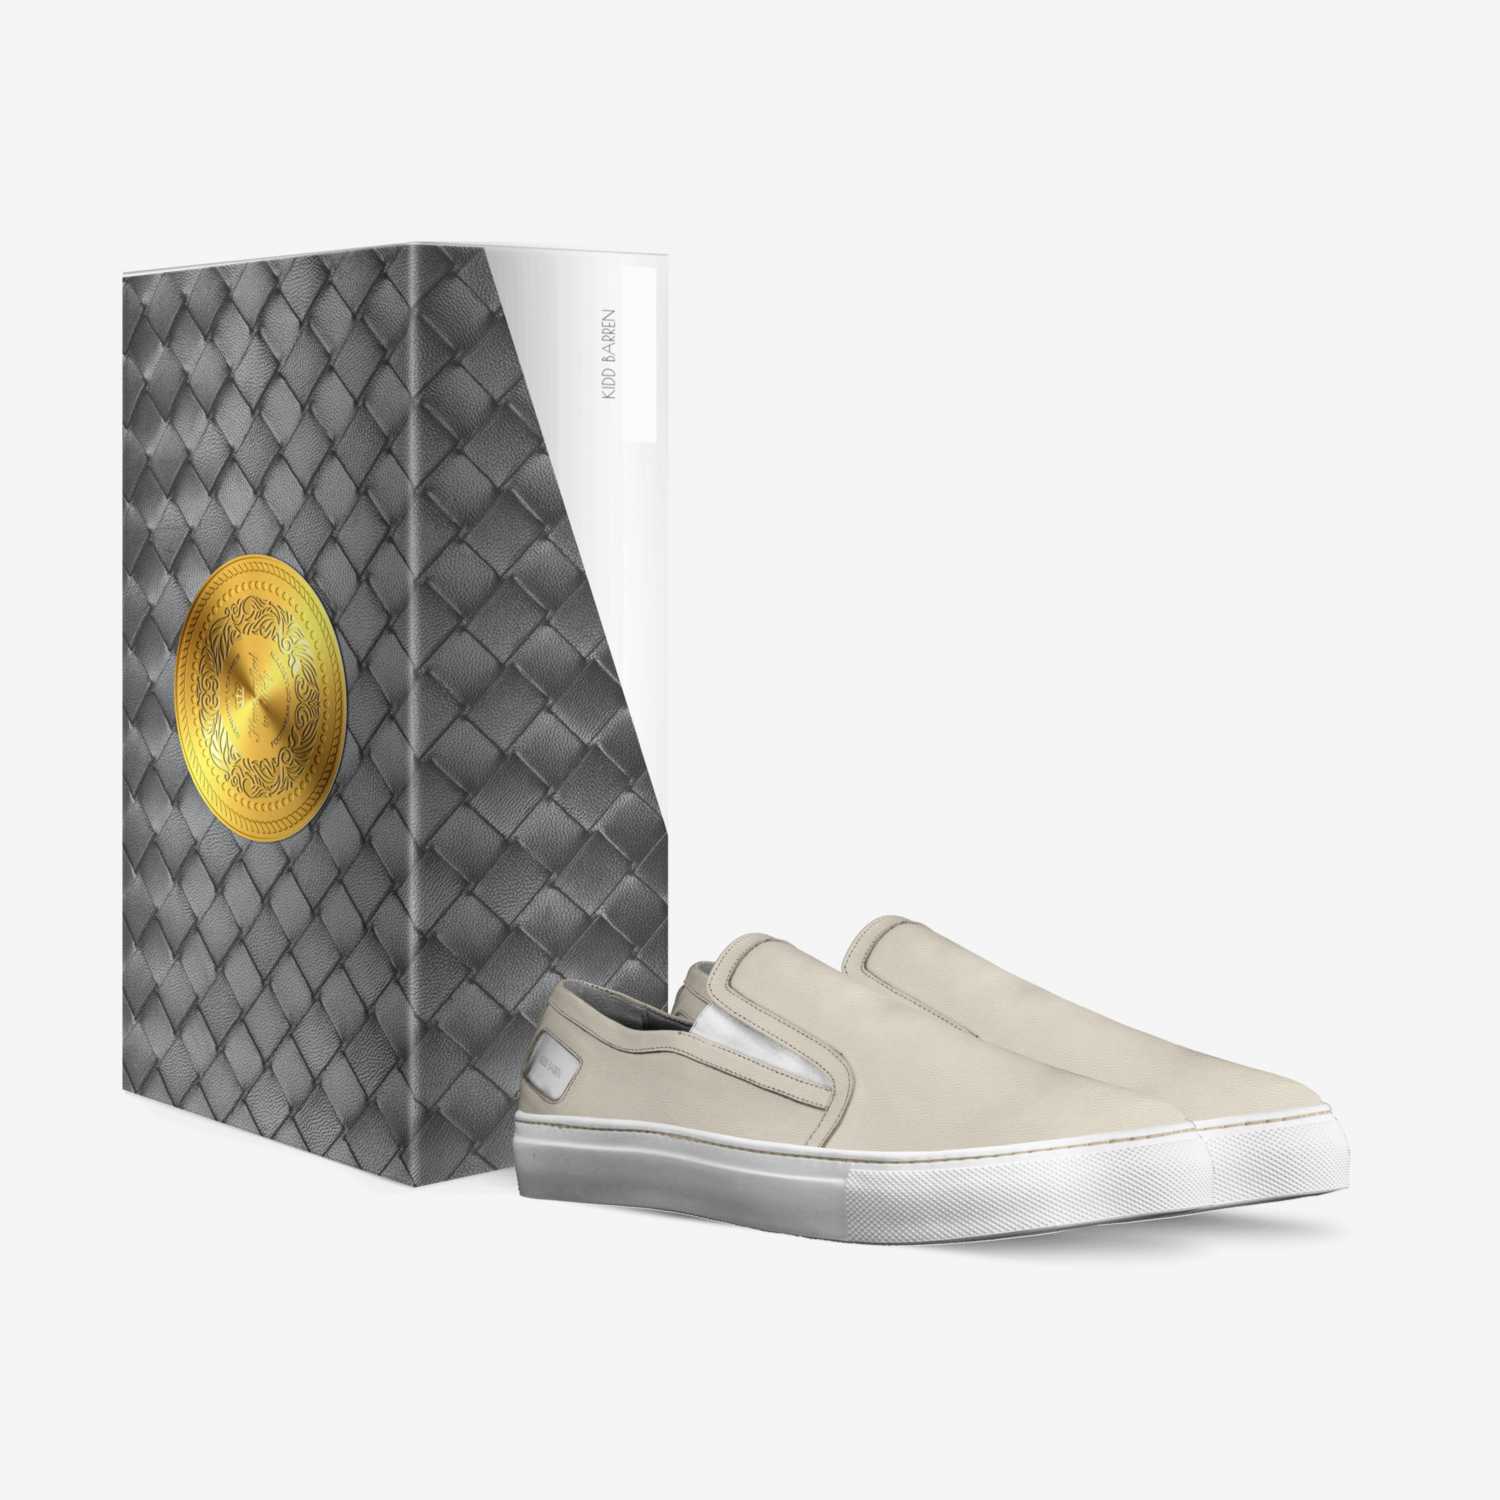 Kidd Barren custom made in Italy shoes by Matt Barren | Box view